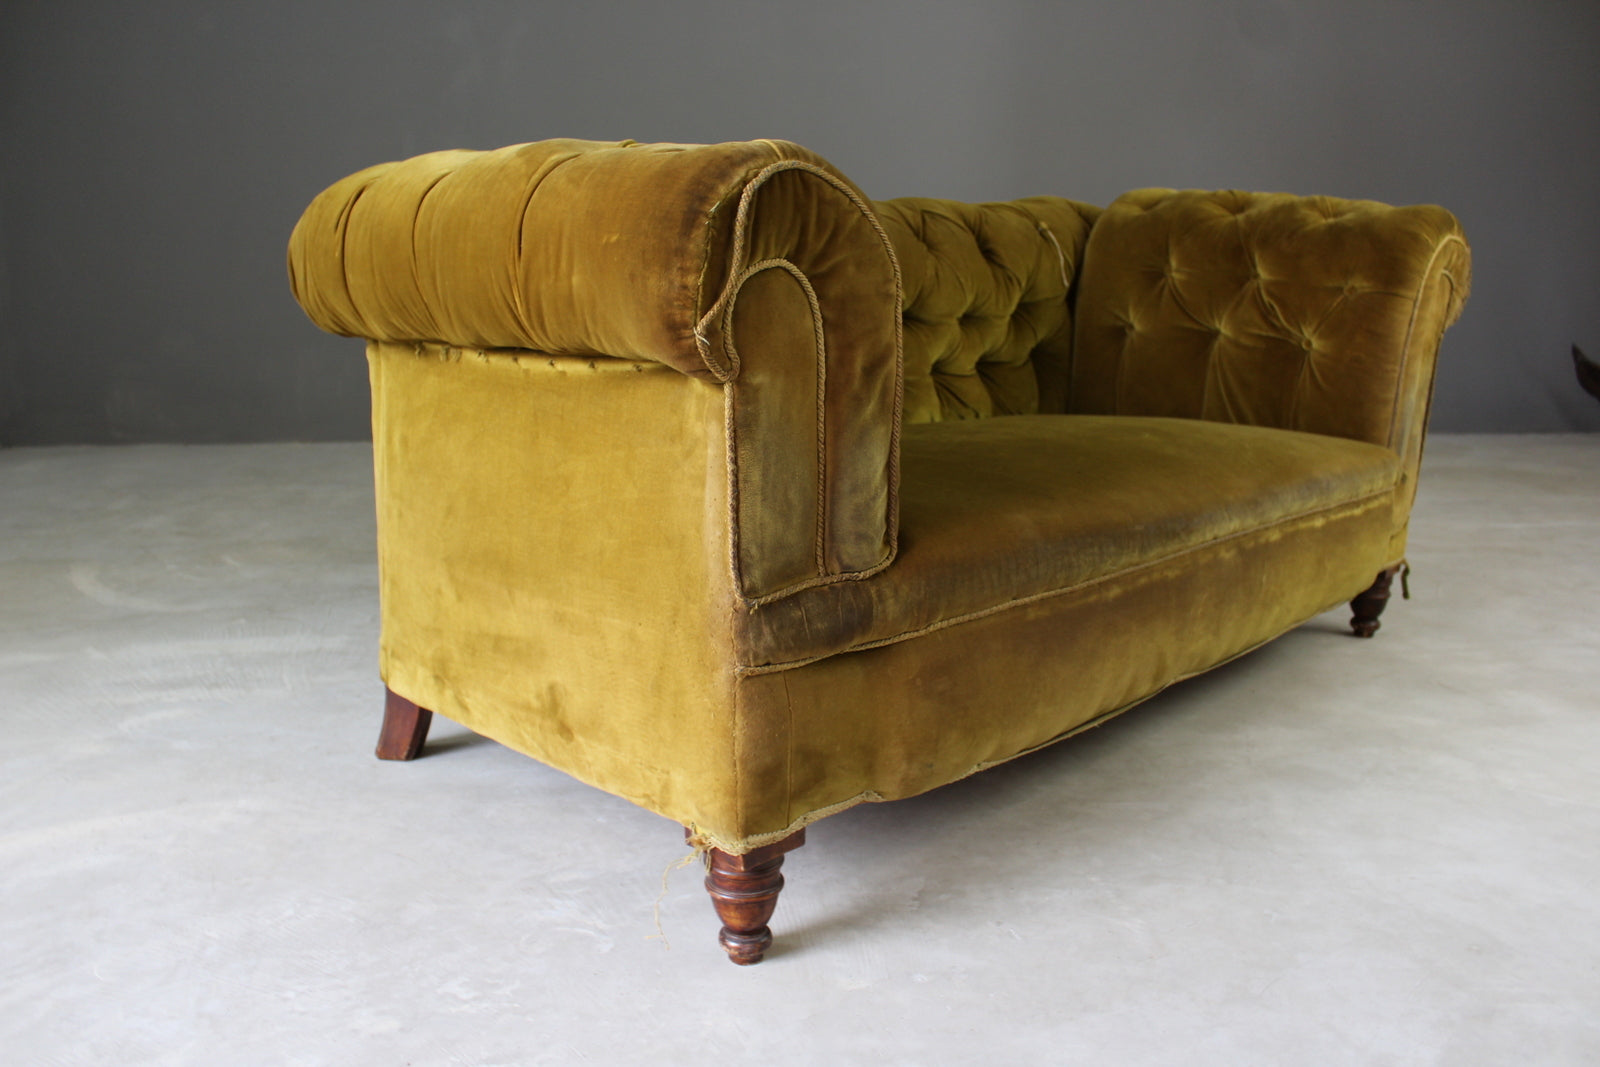 Antique Chesterfield Sofa - Kernow Furniture